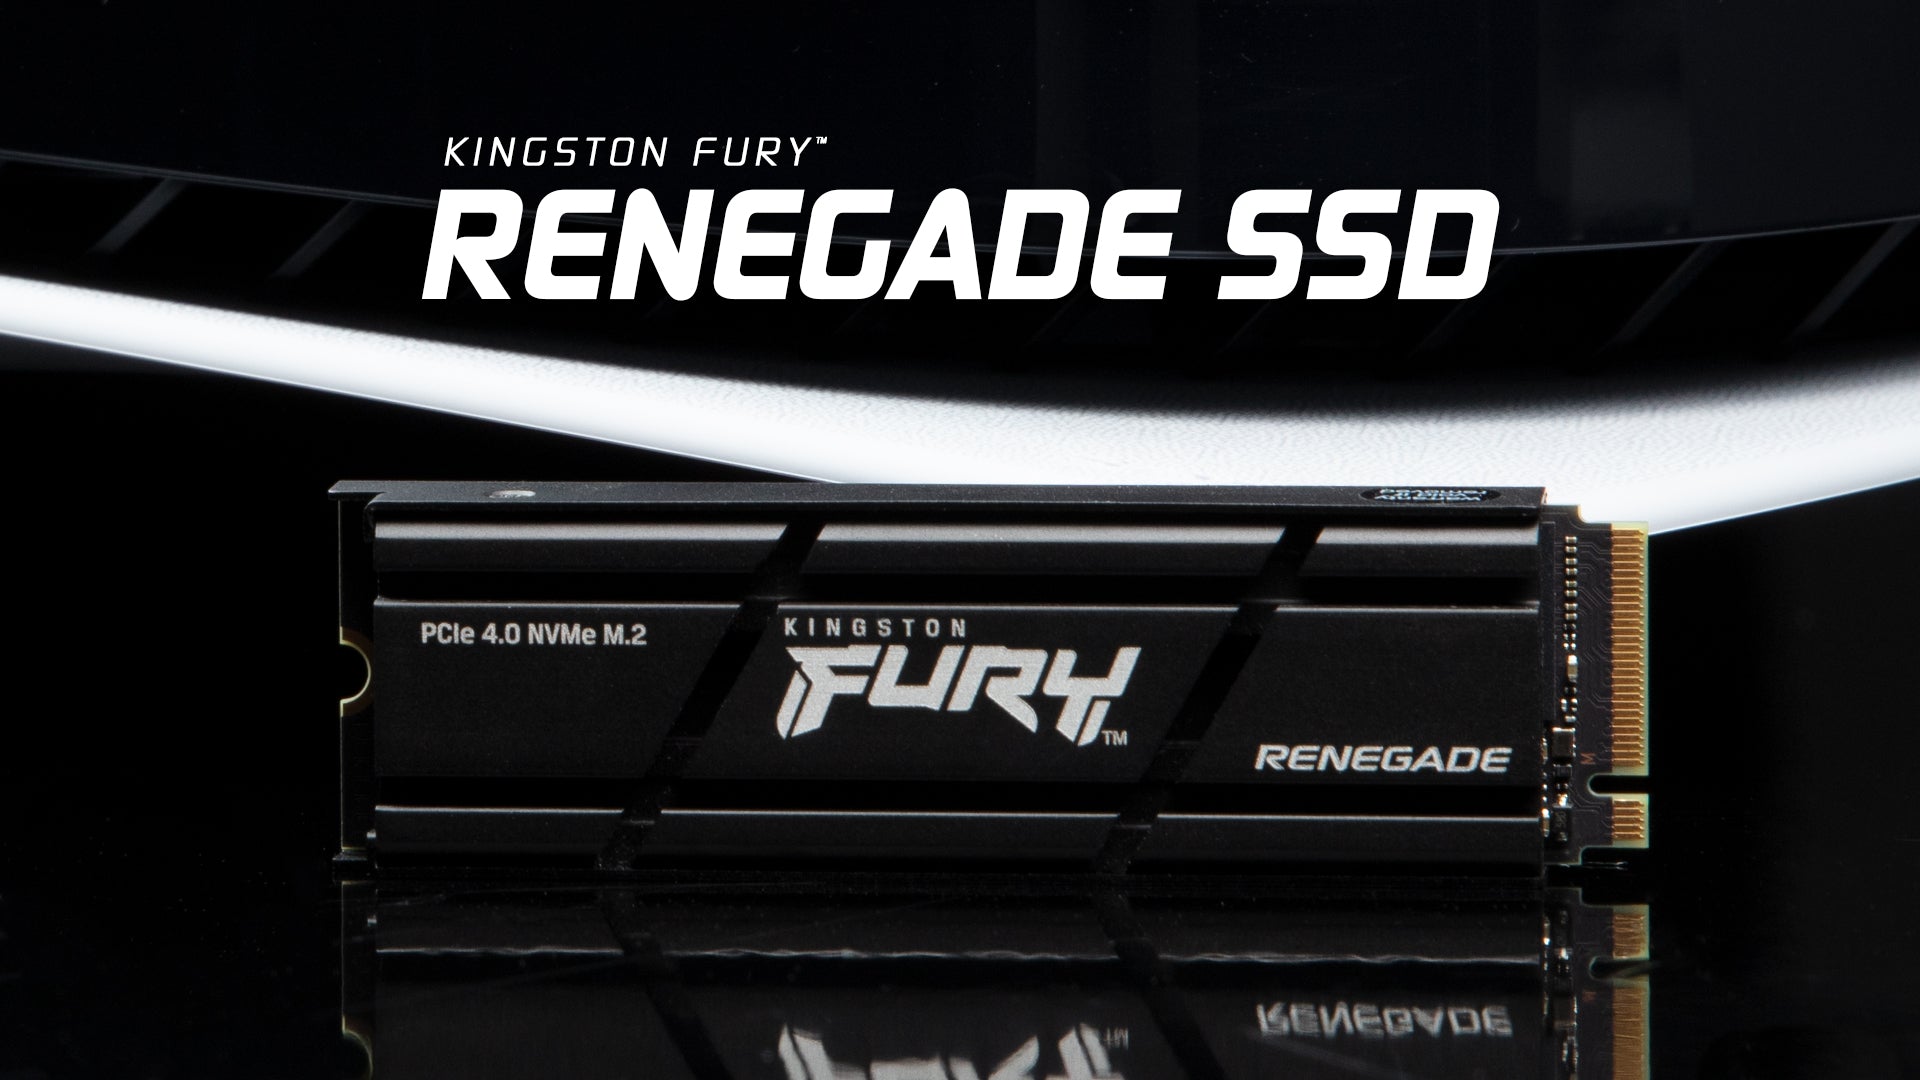 Kingston FURY Renegade 1TB (Heatsink Version) Review (Page 2 of 10)